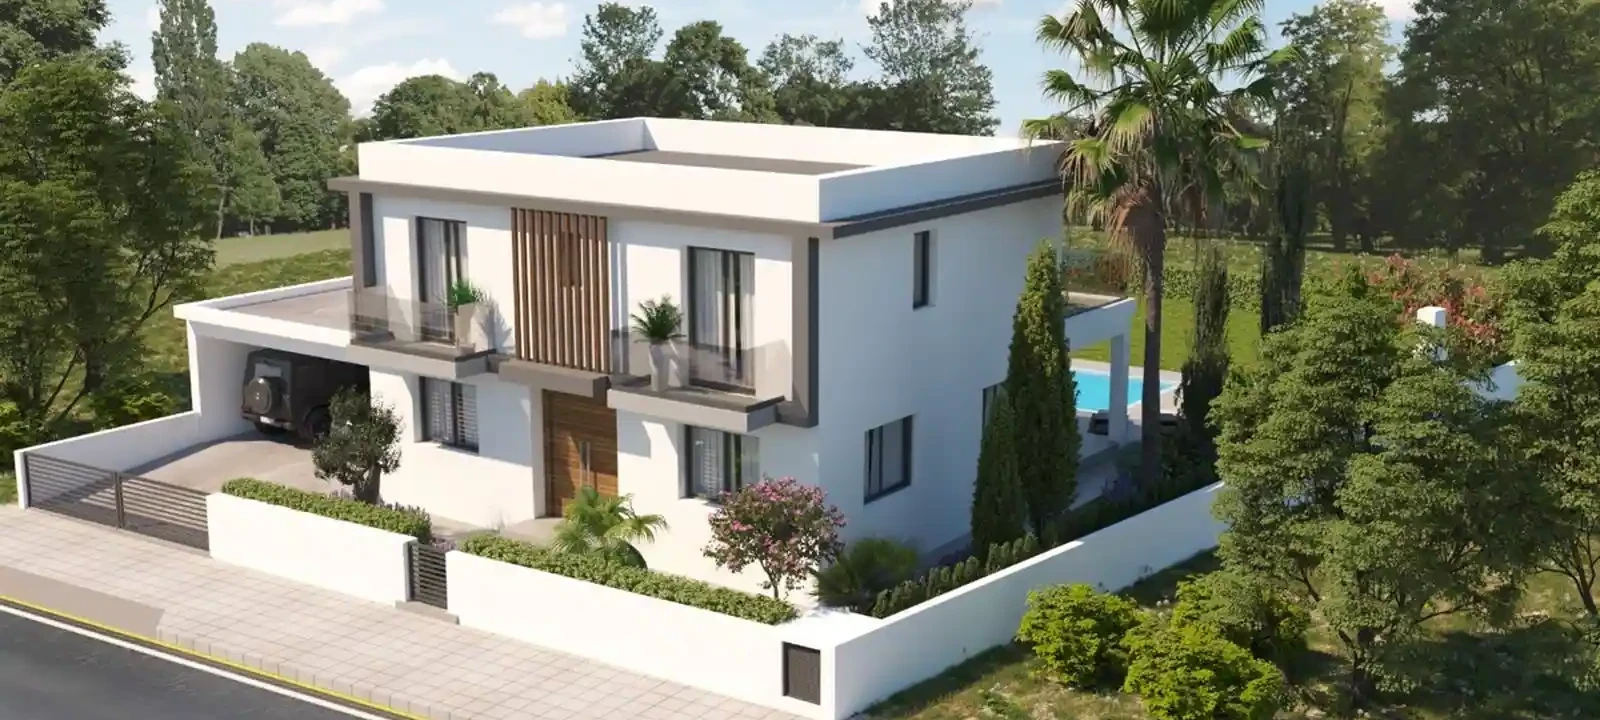 4-bedroom villa fоr sаle €750.000, image 1